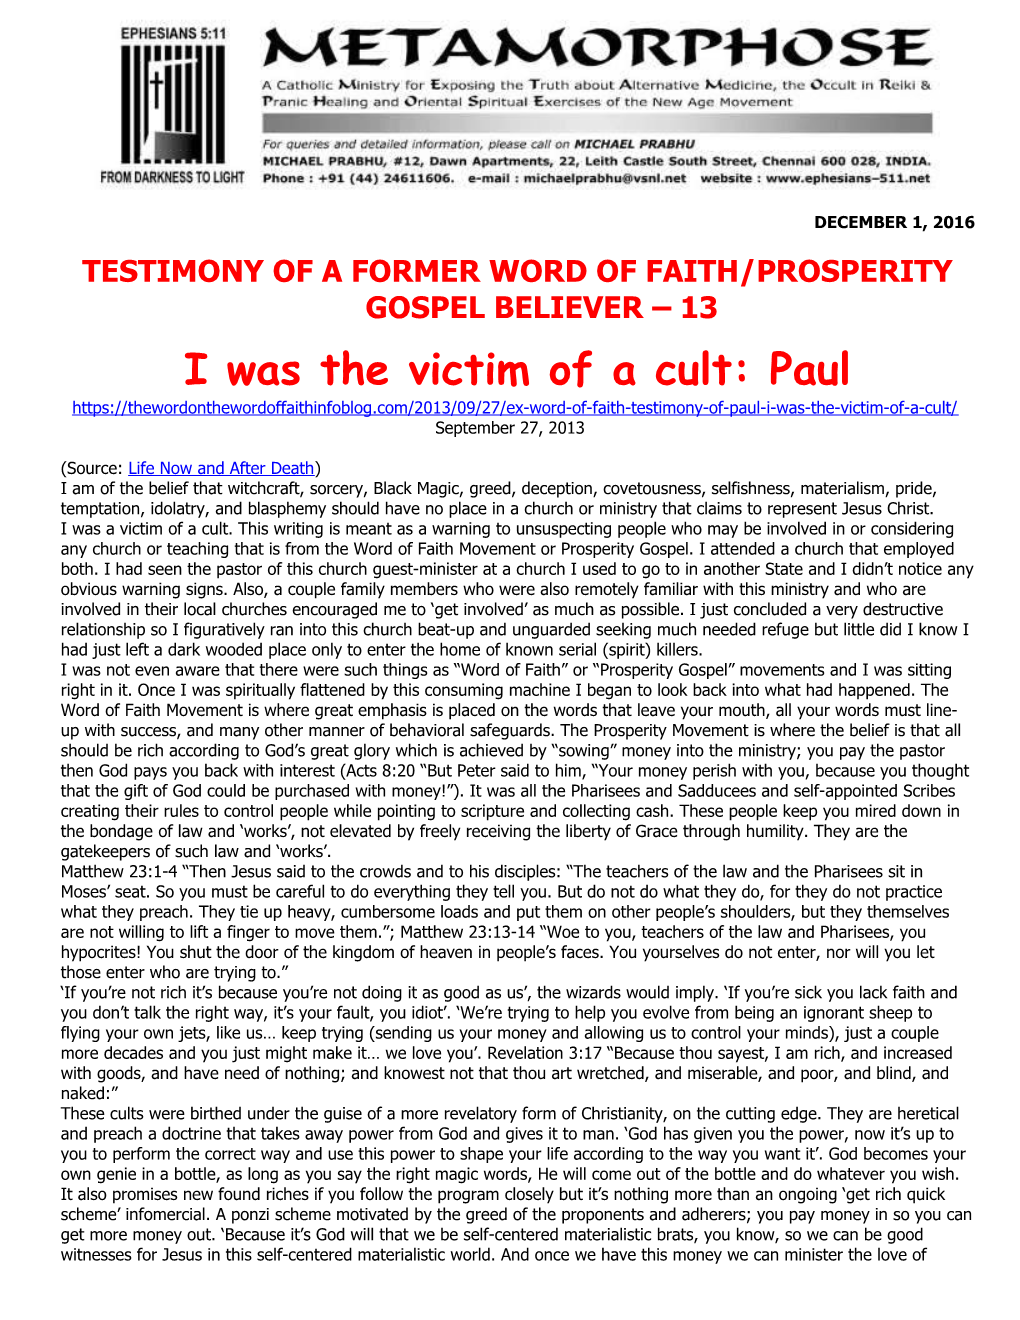 Testimony of a Former Word of Faith/Prosperity Gospel Believer 13